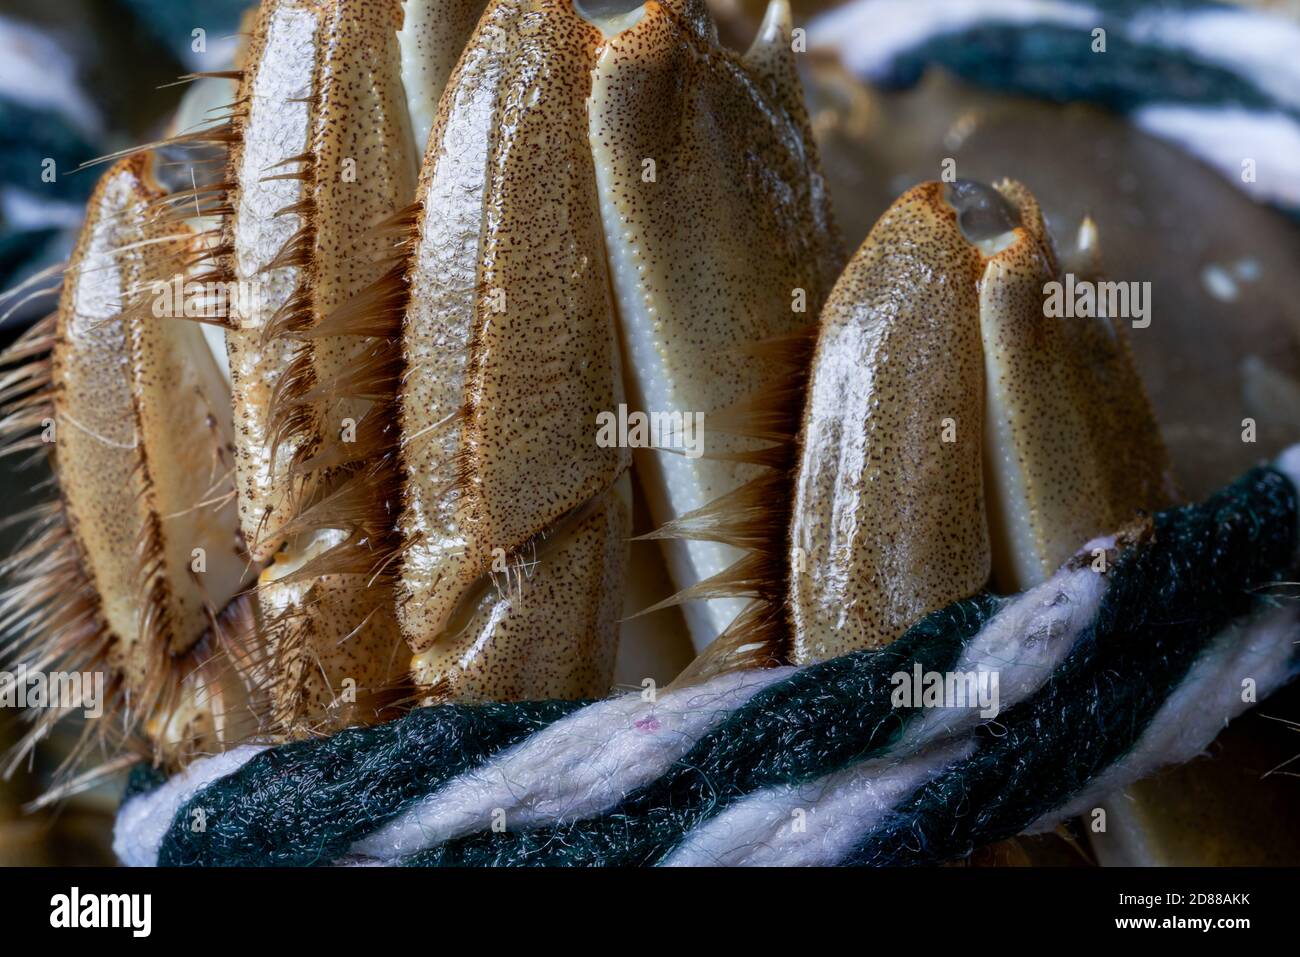 Close-up of plump Yangcheng Lake hairy crabs Stock Photo